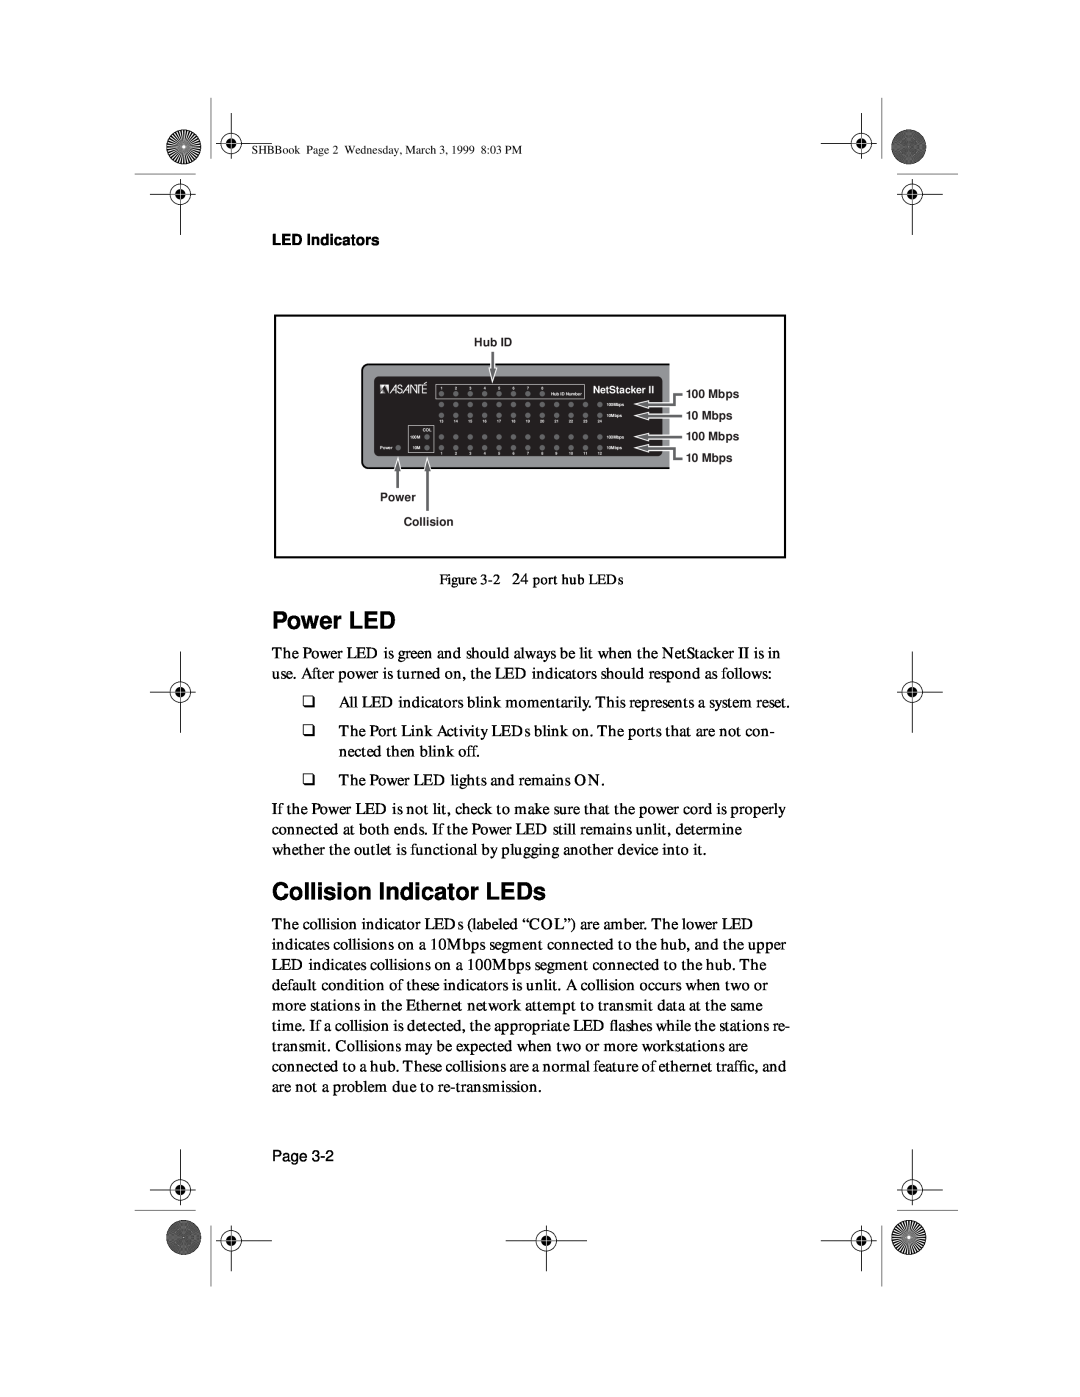 Asante Technologies II user manual Power LED, Collision Indicator LEDs 